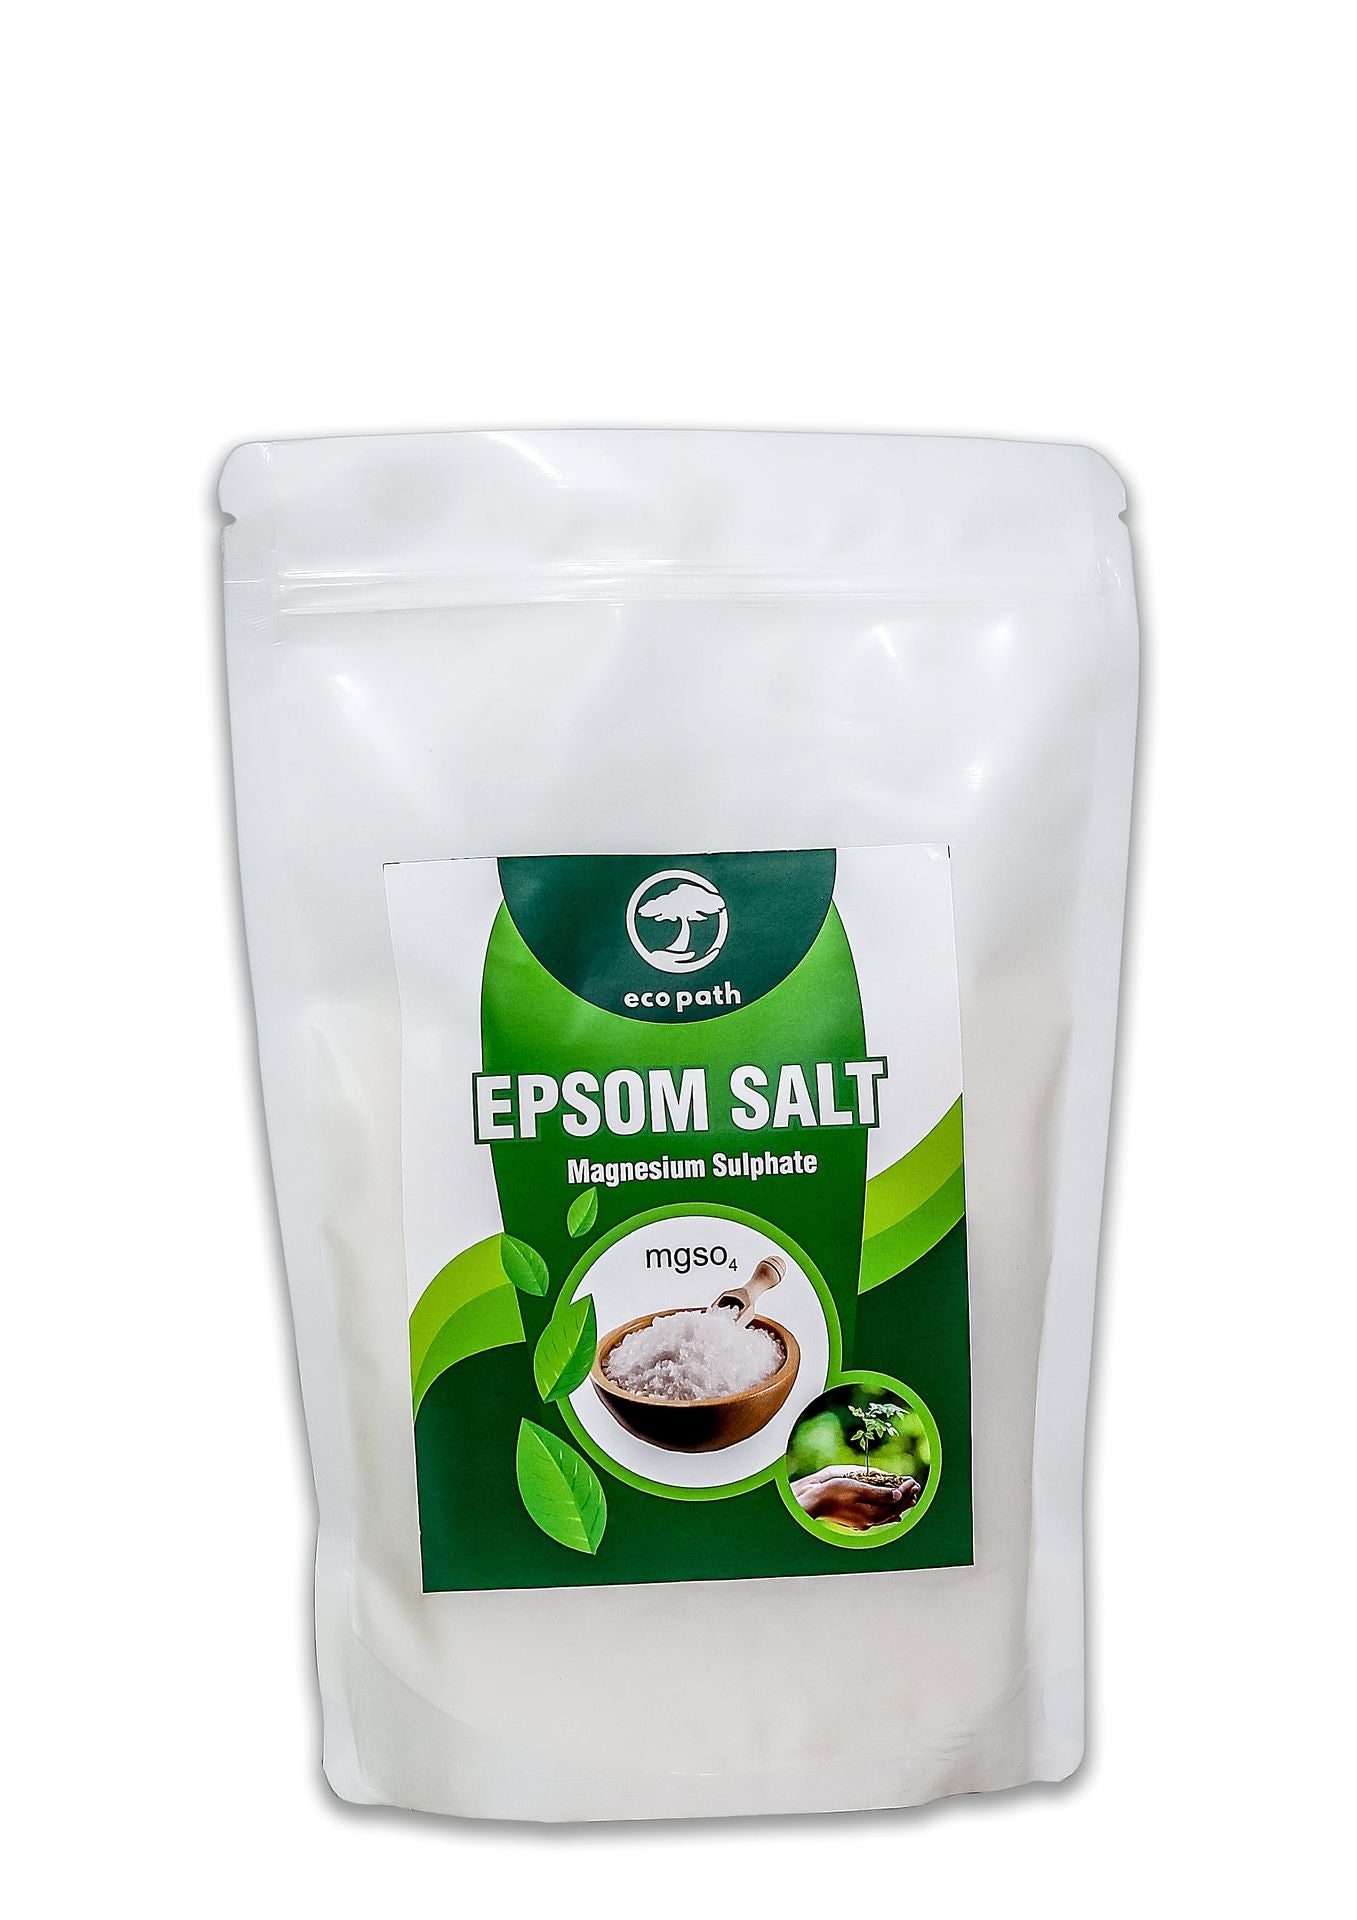 Ecopath Epsom Salt ( Magnesium Sulfate) - hfnl!fe